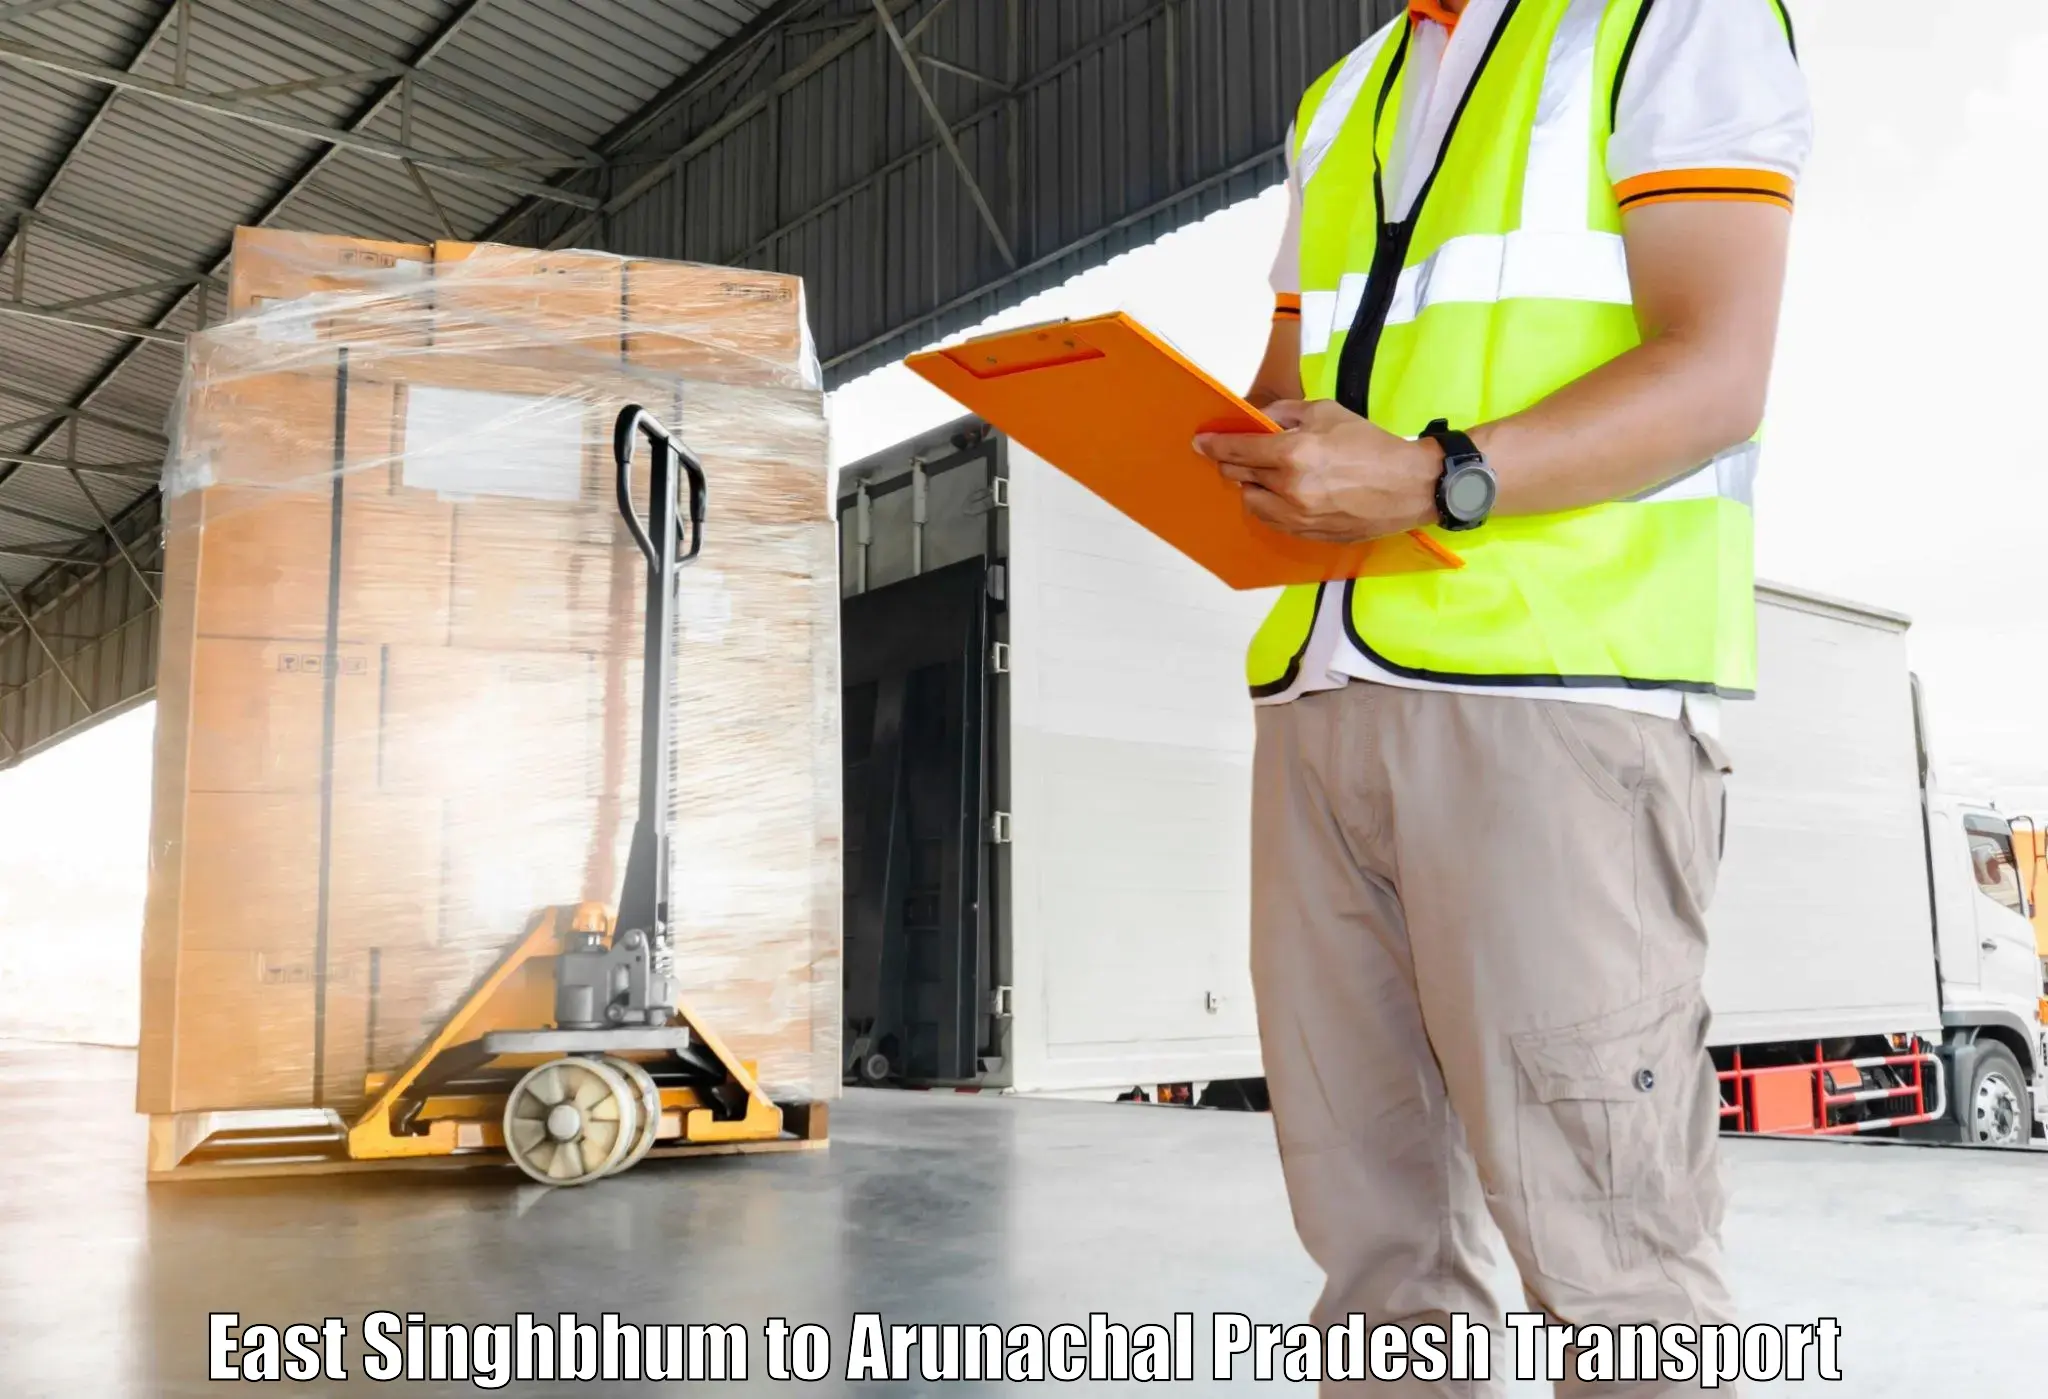 Container transport service East Singhbhum to Arunachal Pradesh